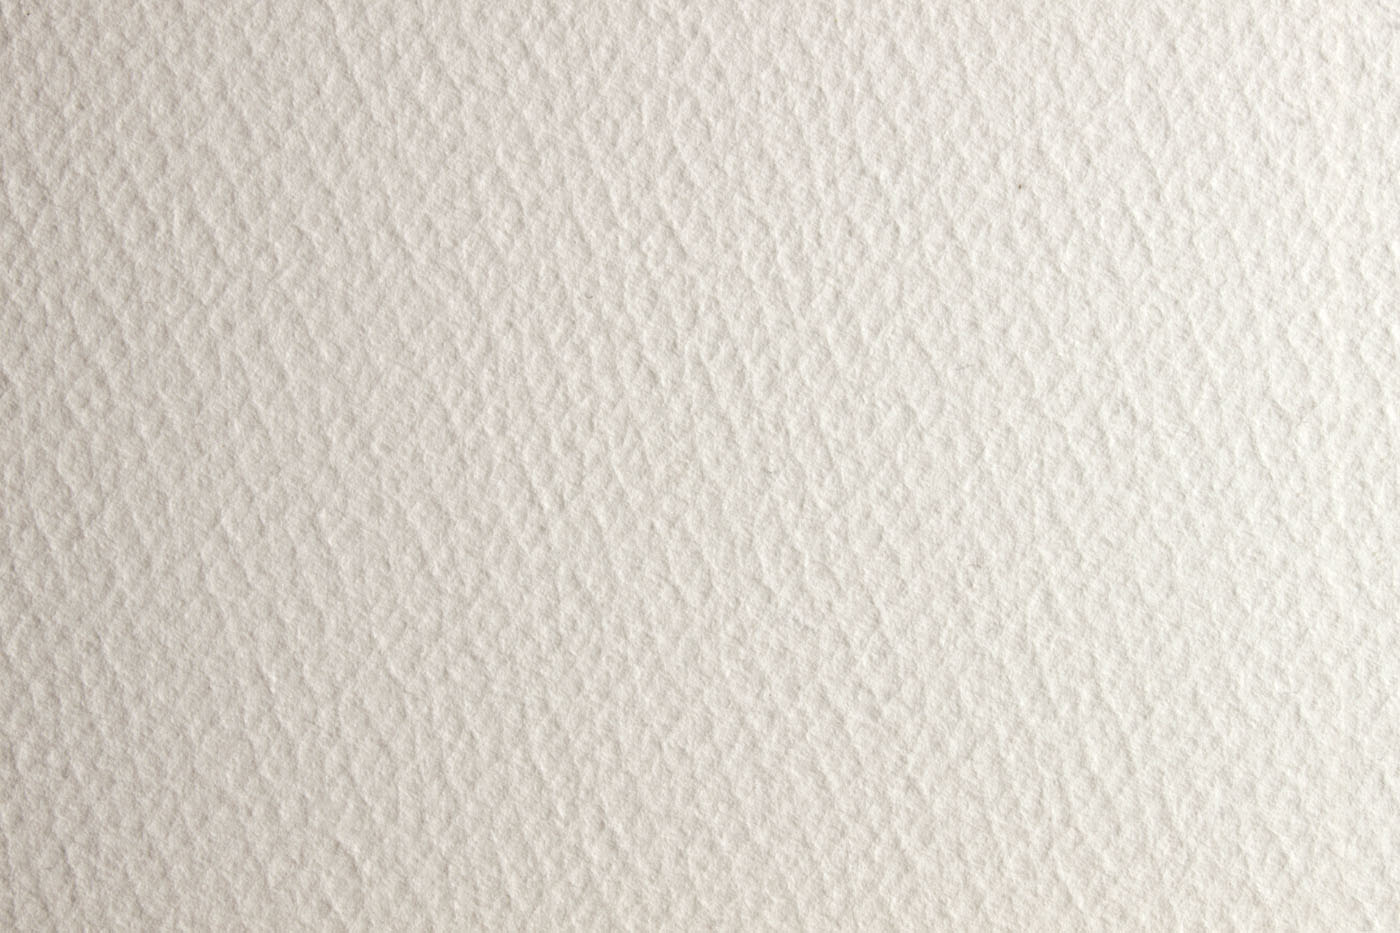 Бумага для акварели ARTISTICO TRADITIONAL WHITE 640г/кв.м 560х760мм grain fin (среднее зерно) хлопок 100% по 1 172.00 руб от Fabriano